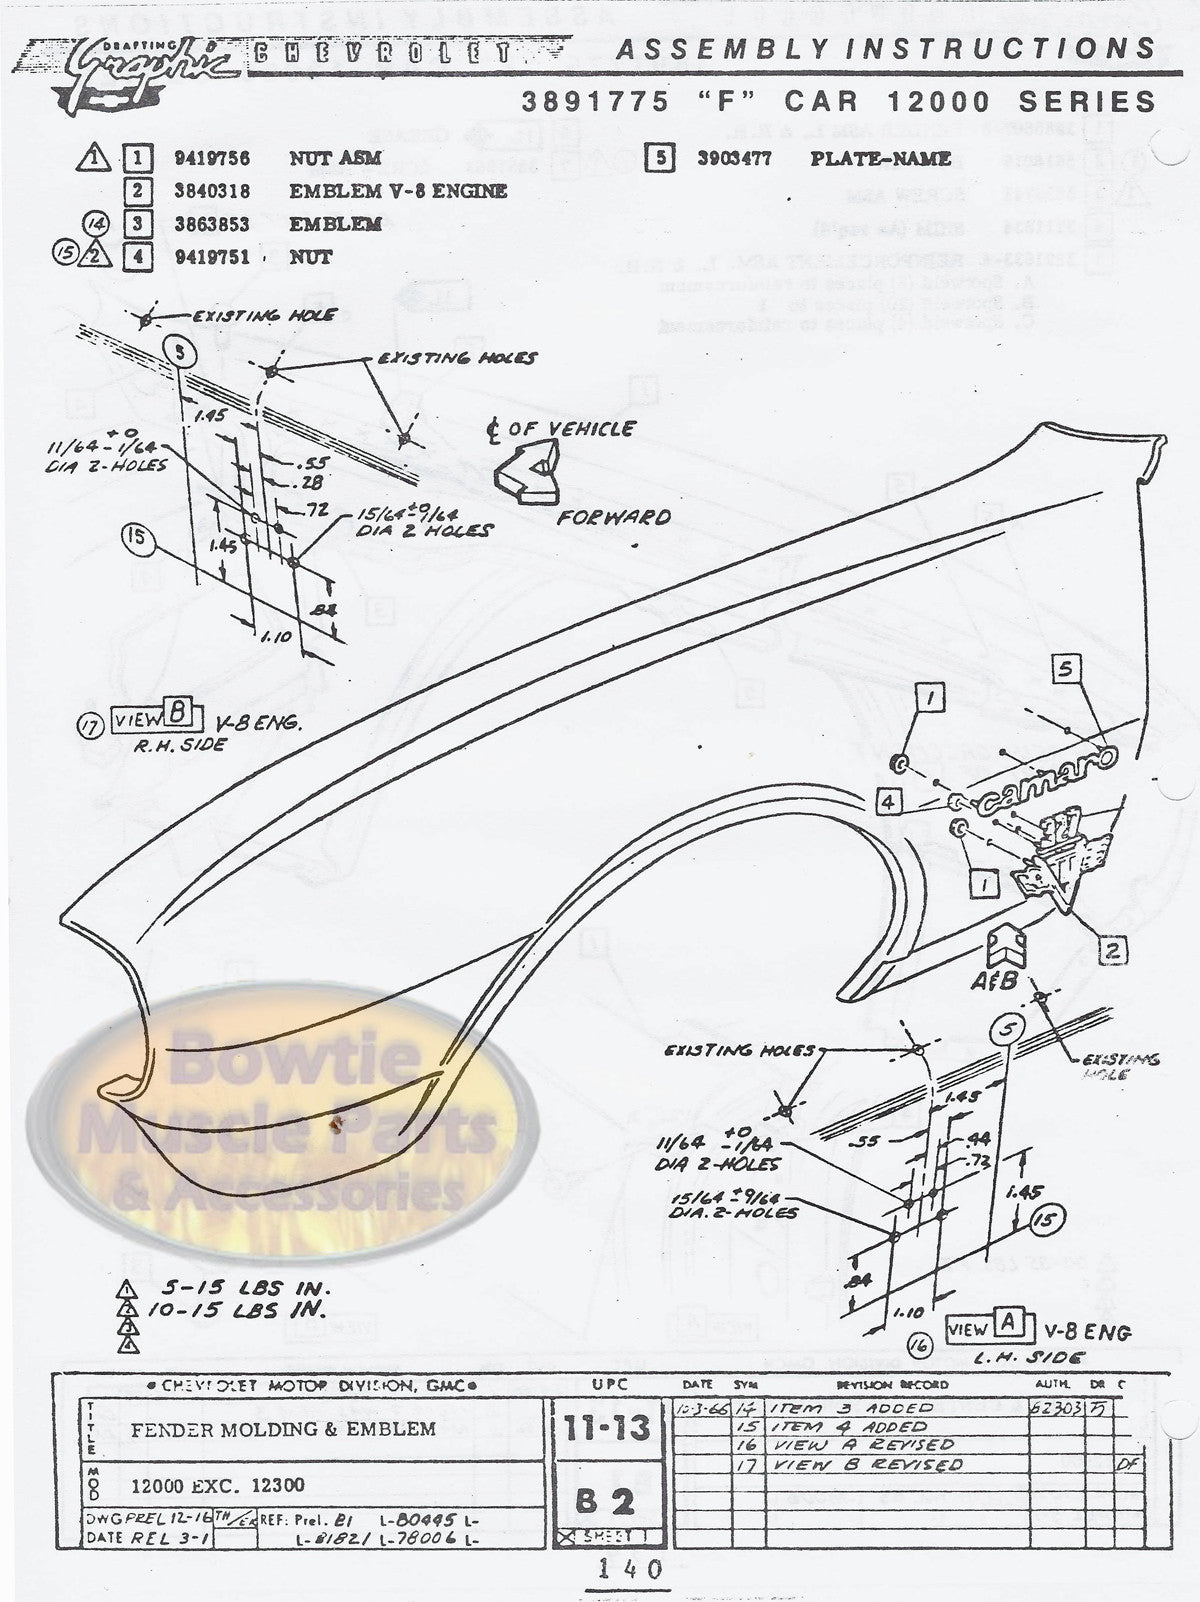 1969 camaro fisher body manual pdf